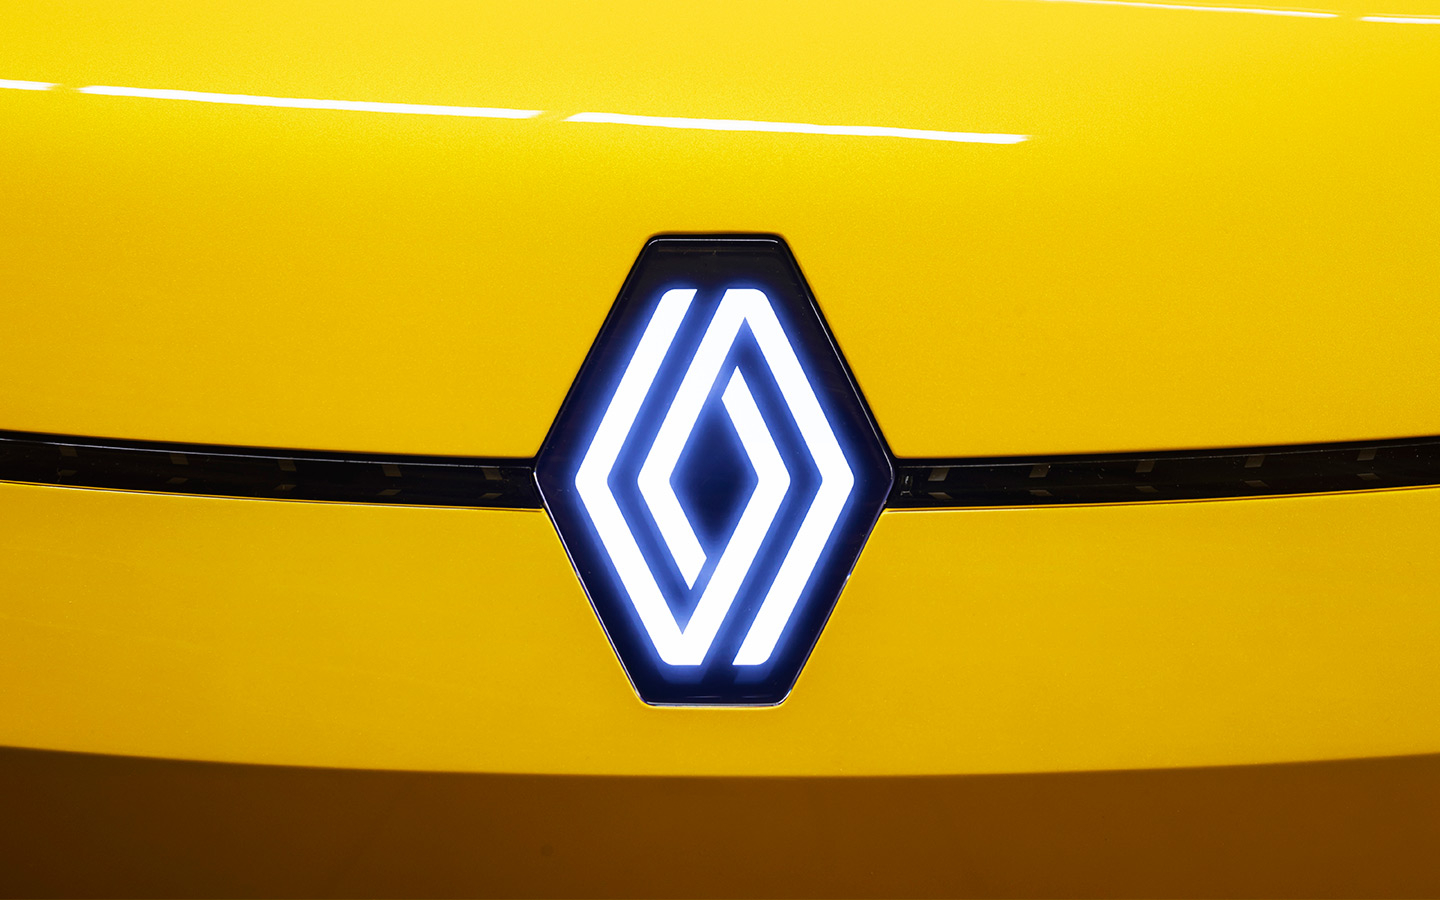 Фото: Renault